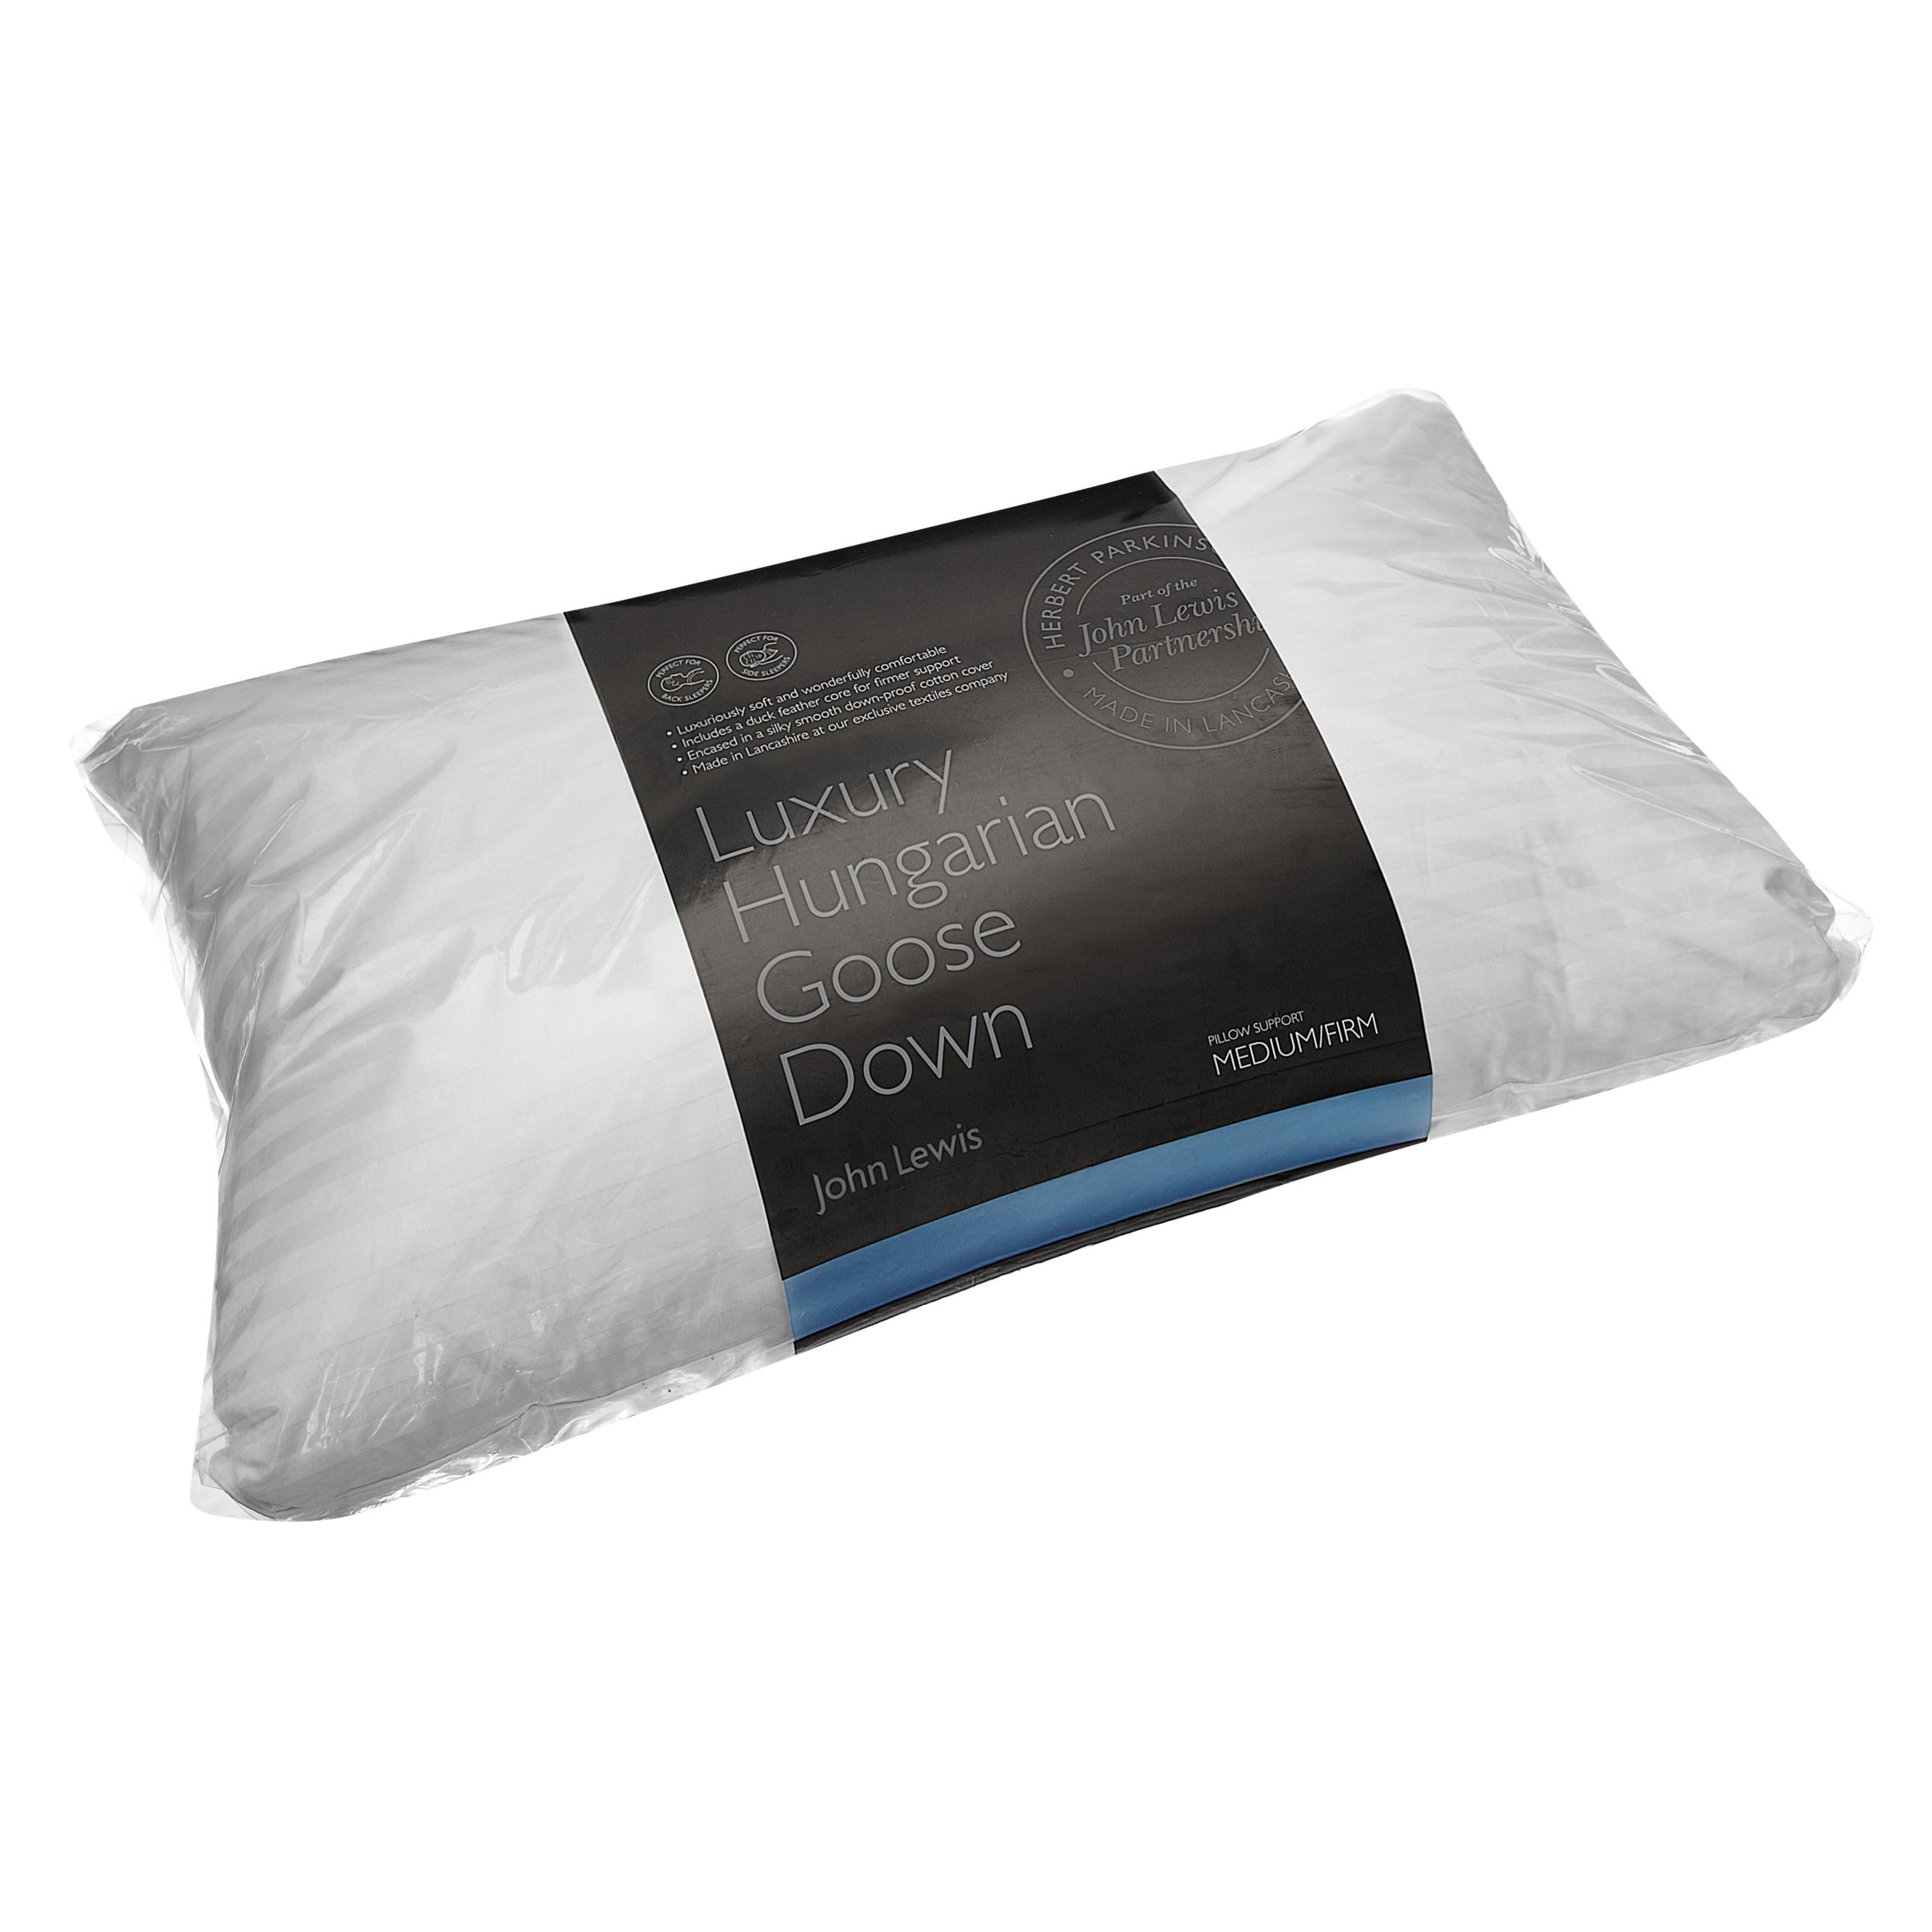 John Lewis & Partners Luxury Hungarian Goose Down Standard Pillow ...